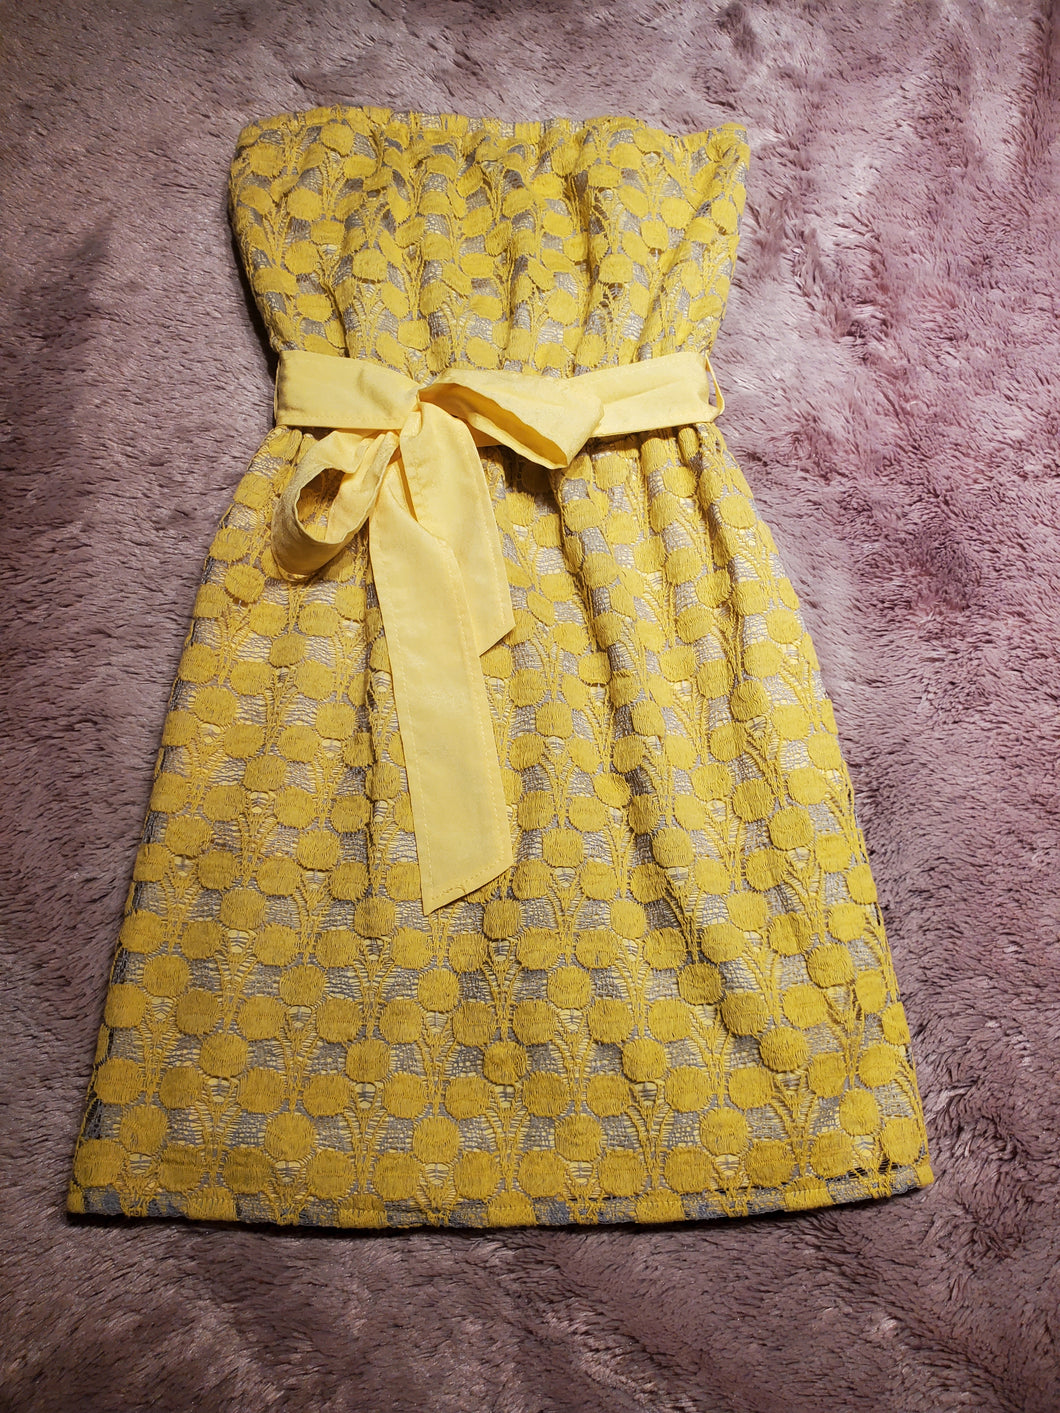 Velvet Heart strapless dress, size XS, yellow and gray XS